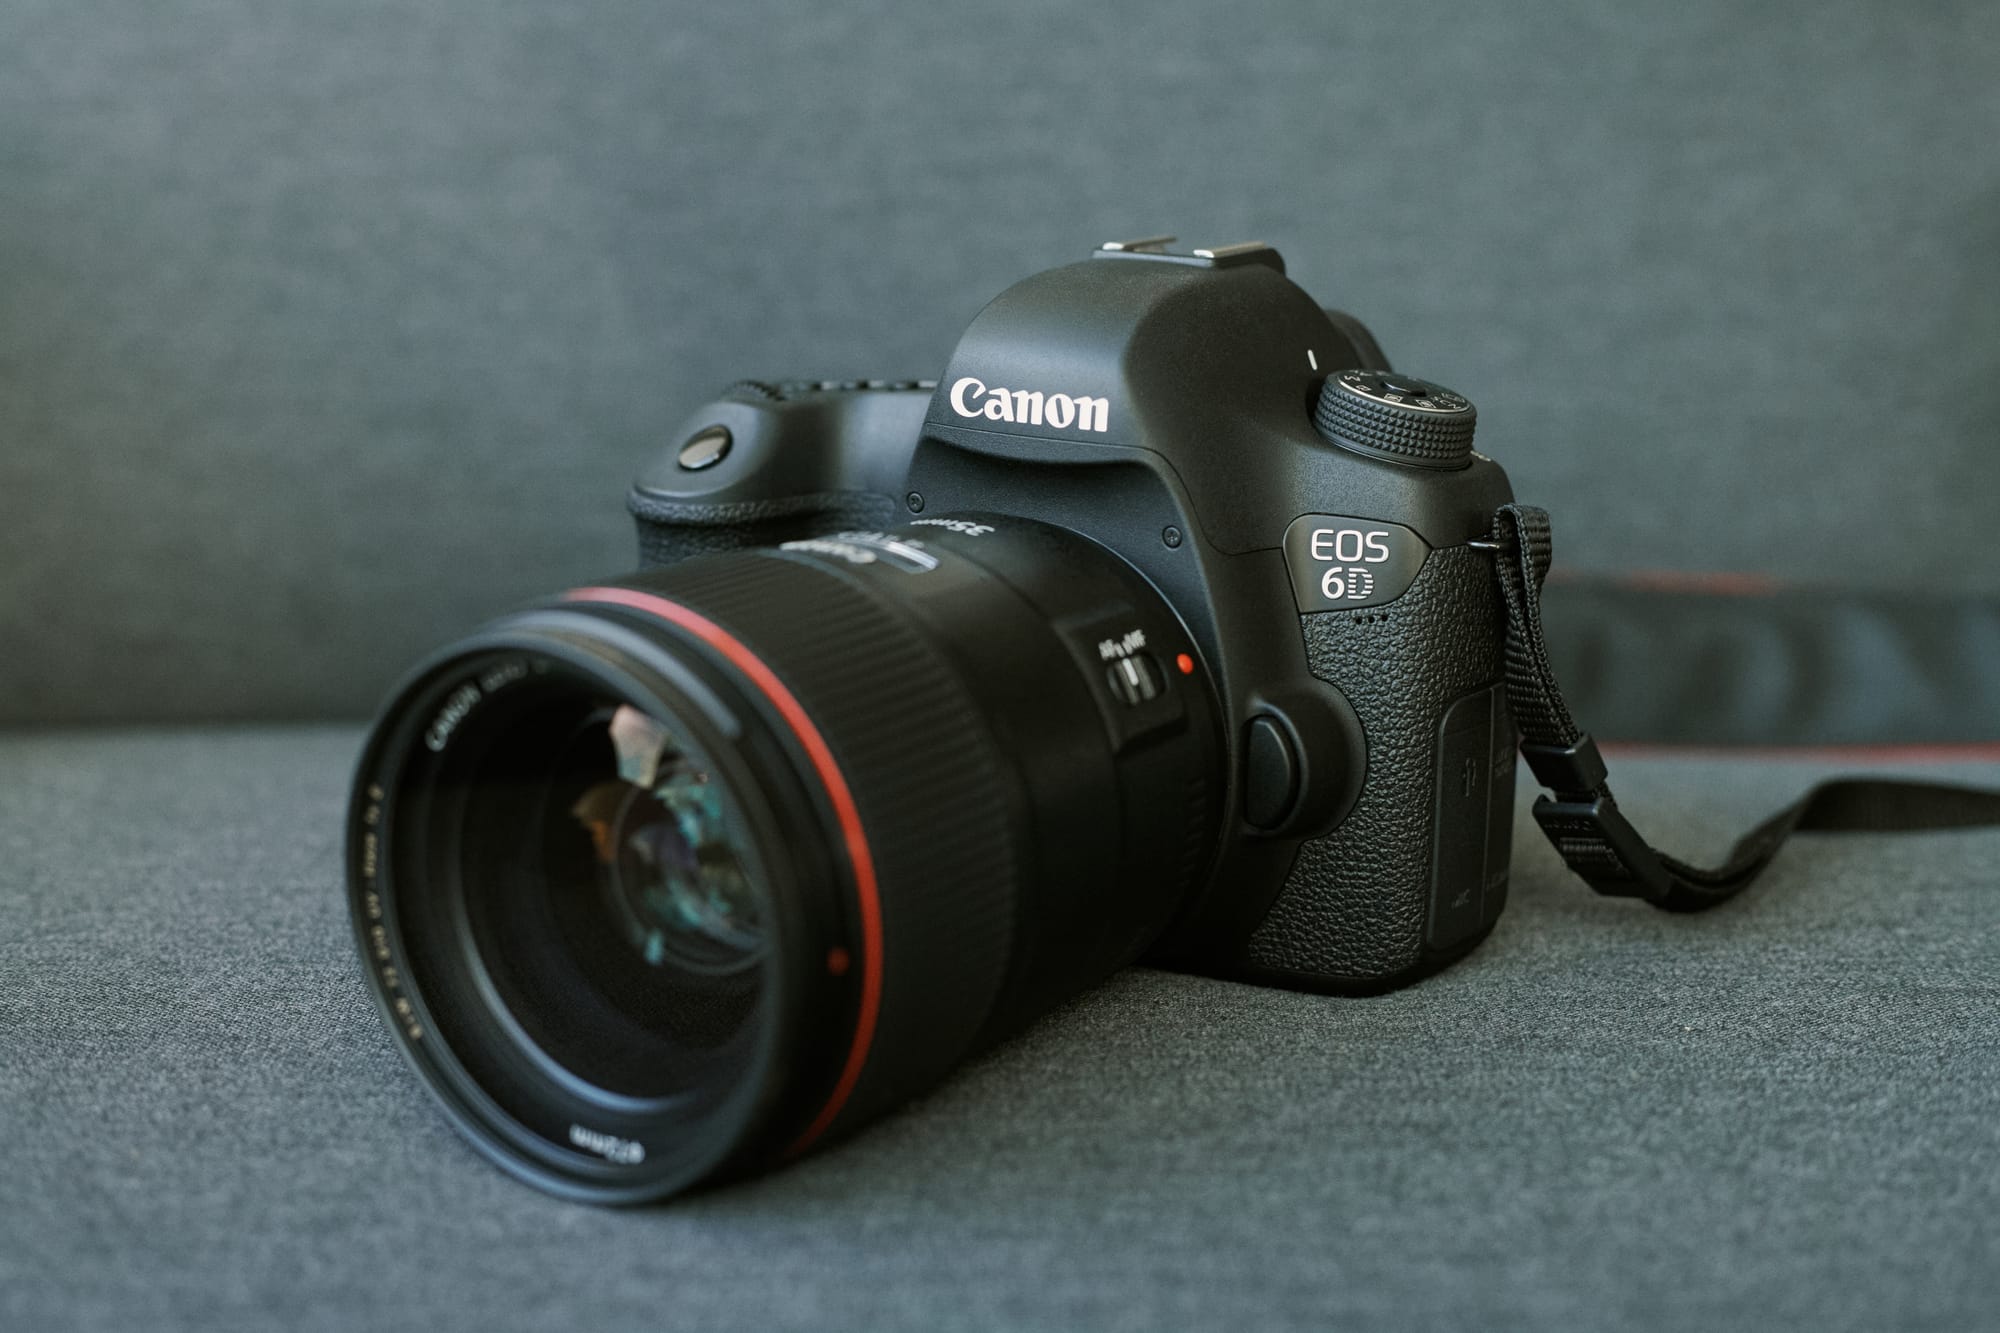 A Review Of The Original Canon EOS 6D